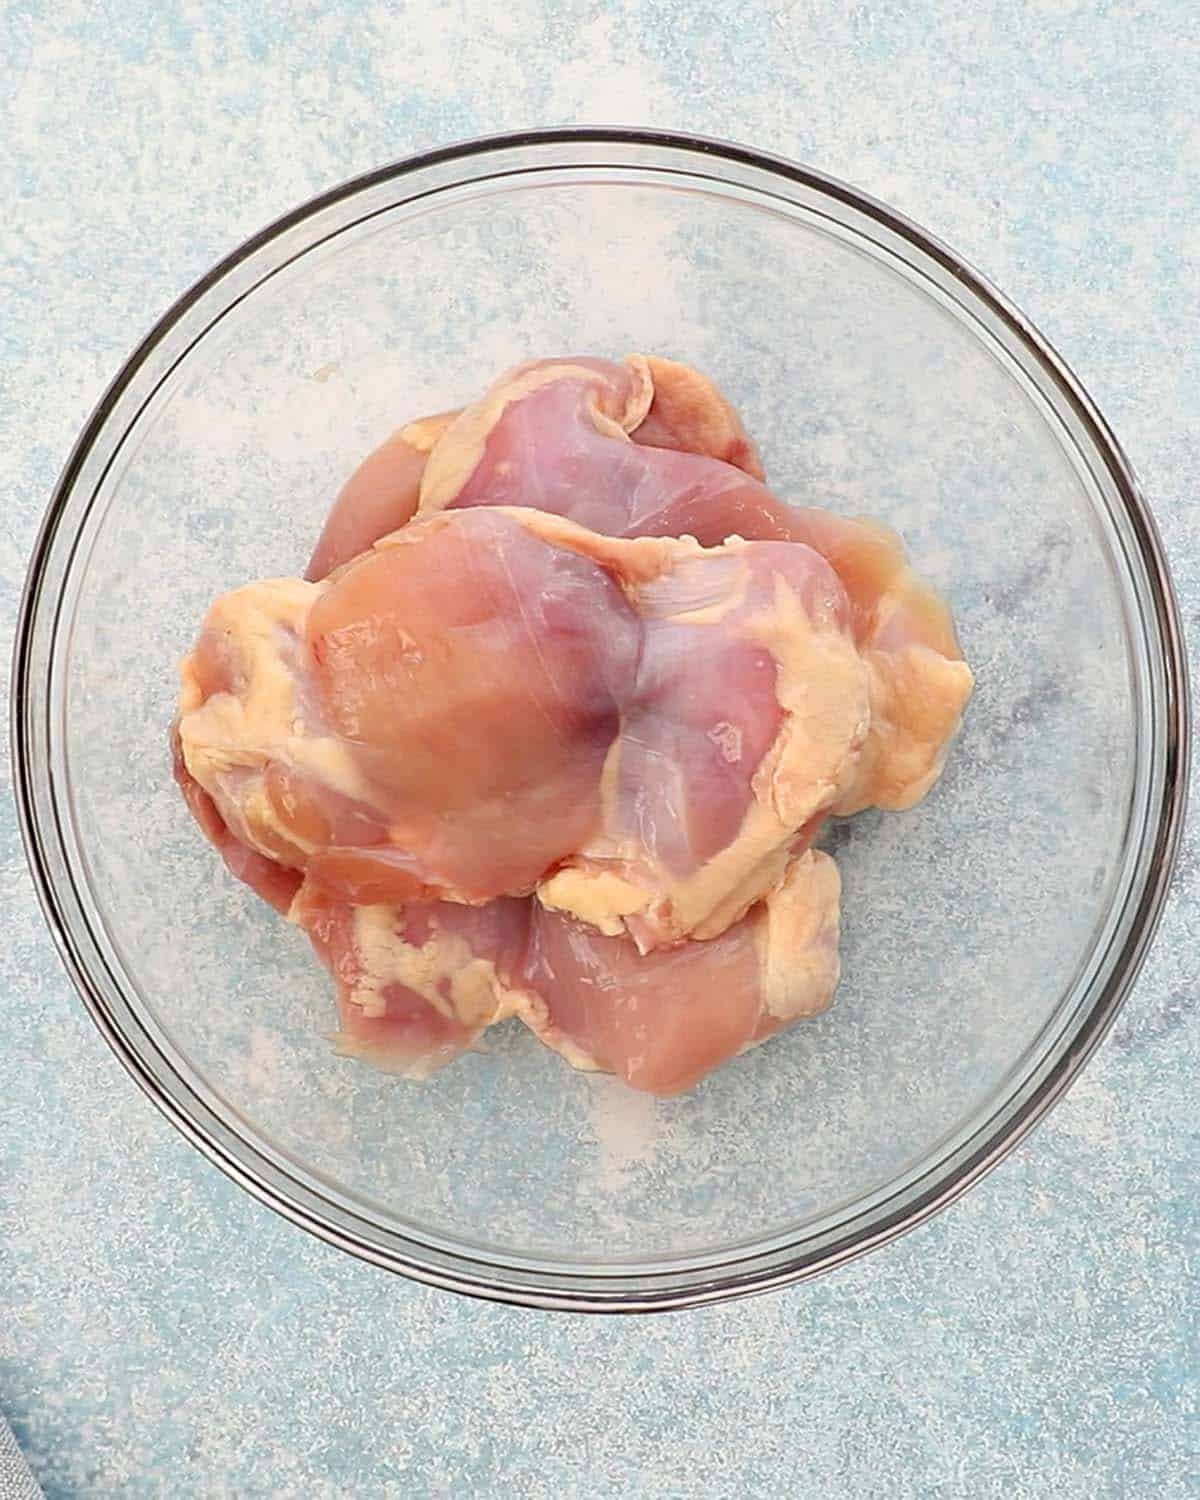 4 raw boneless chicken thighs in a glass bowl.